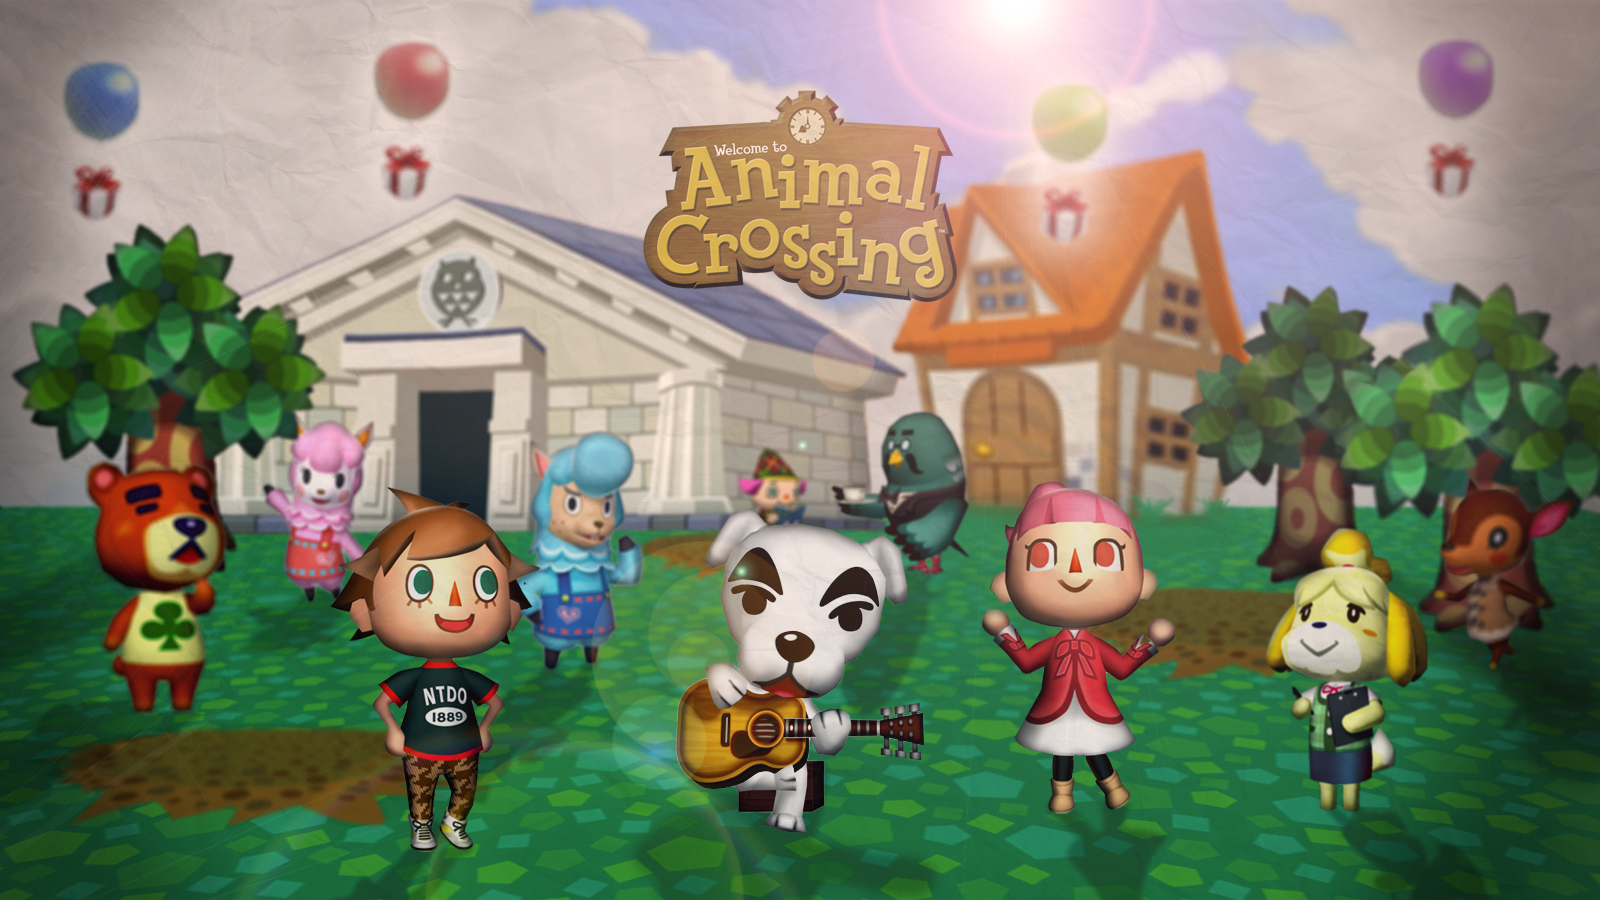   Animal  Crossing  New Leaf  review stefanb33